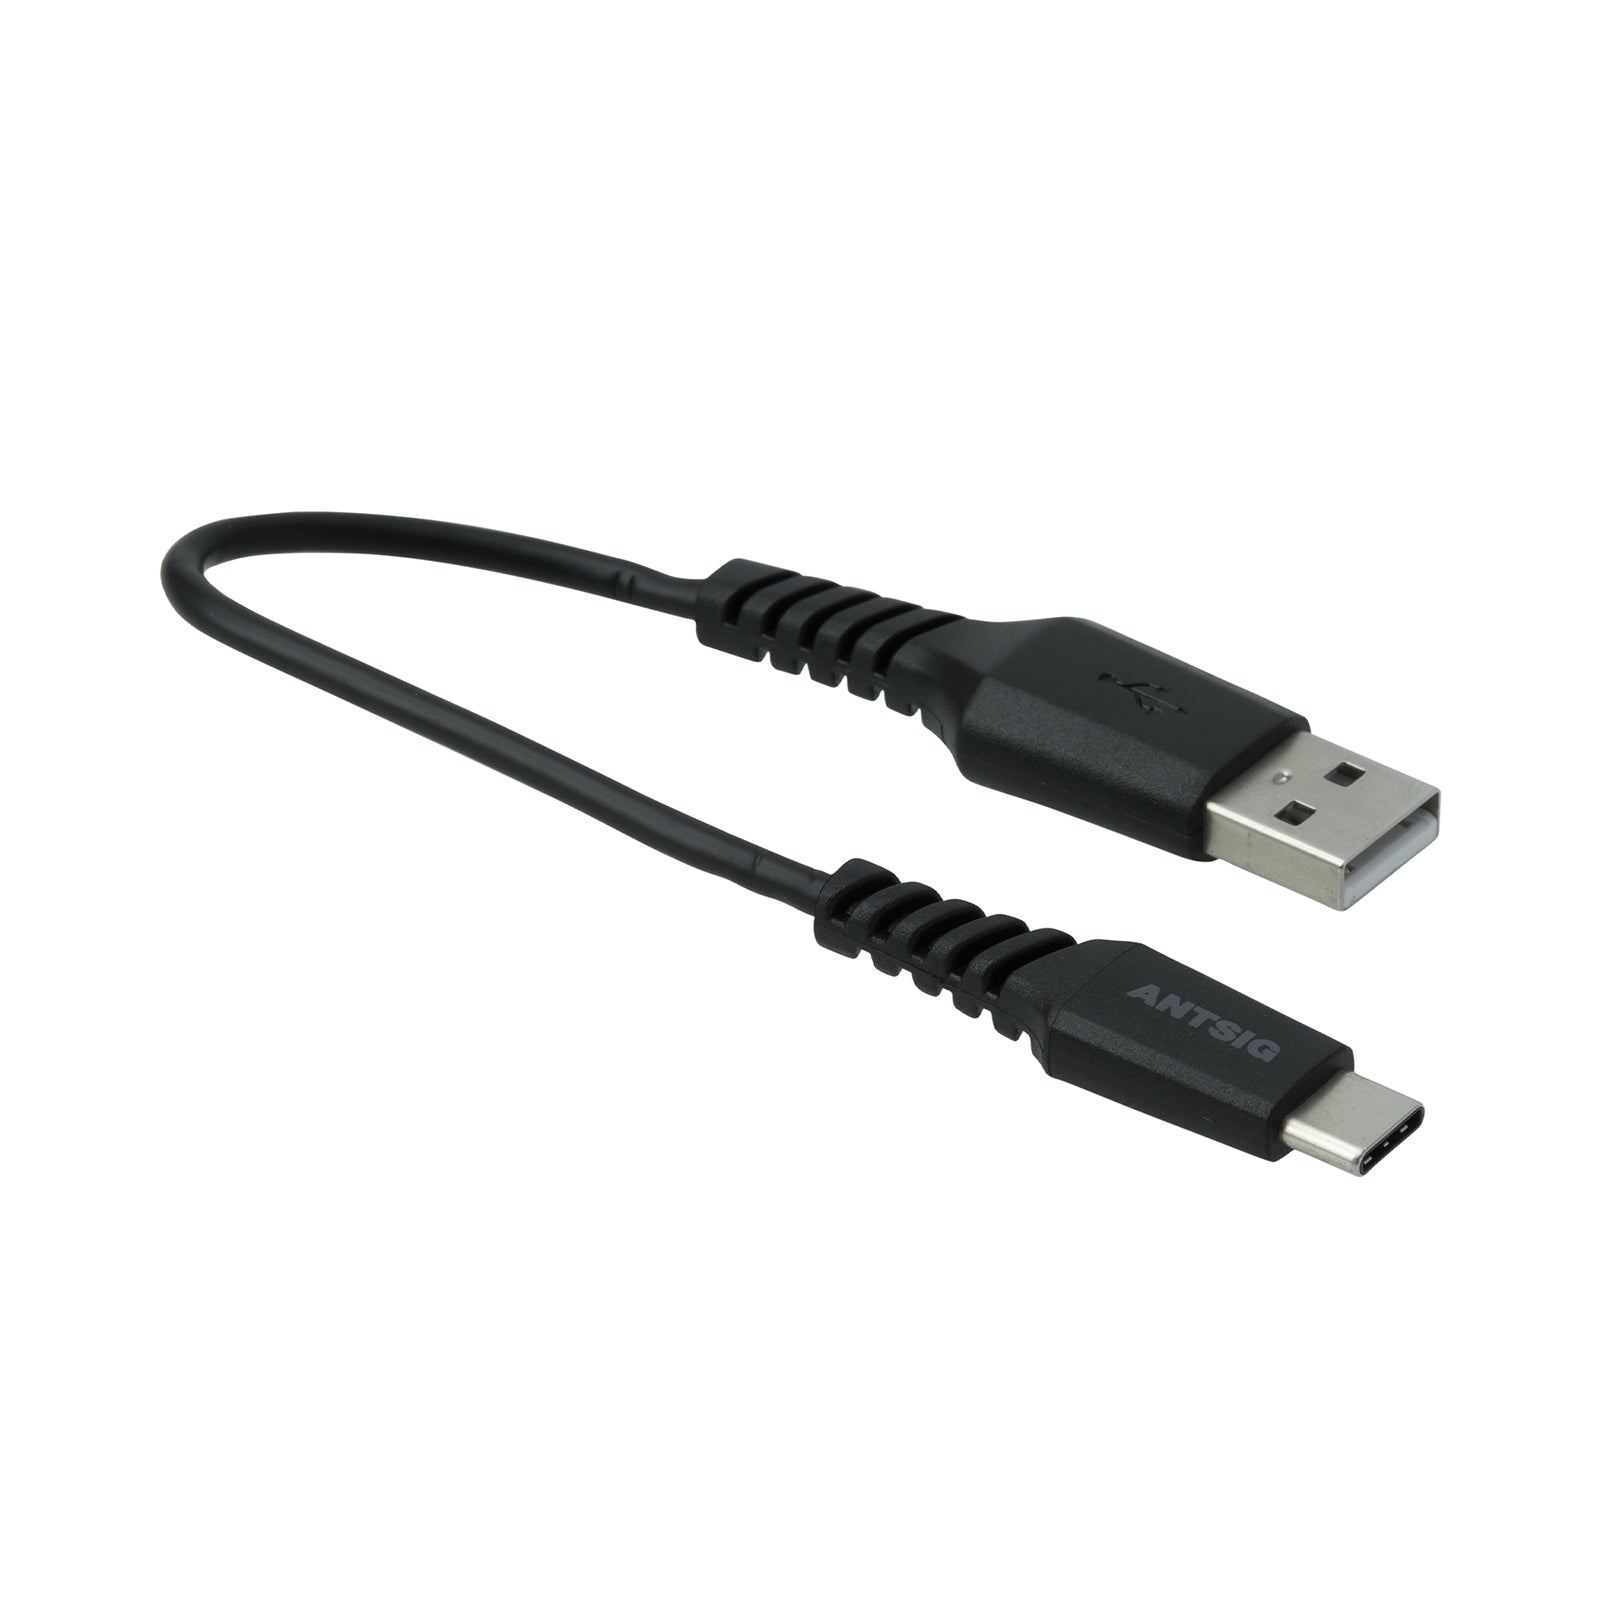 10cm USB-A to USB-C USB 2.0